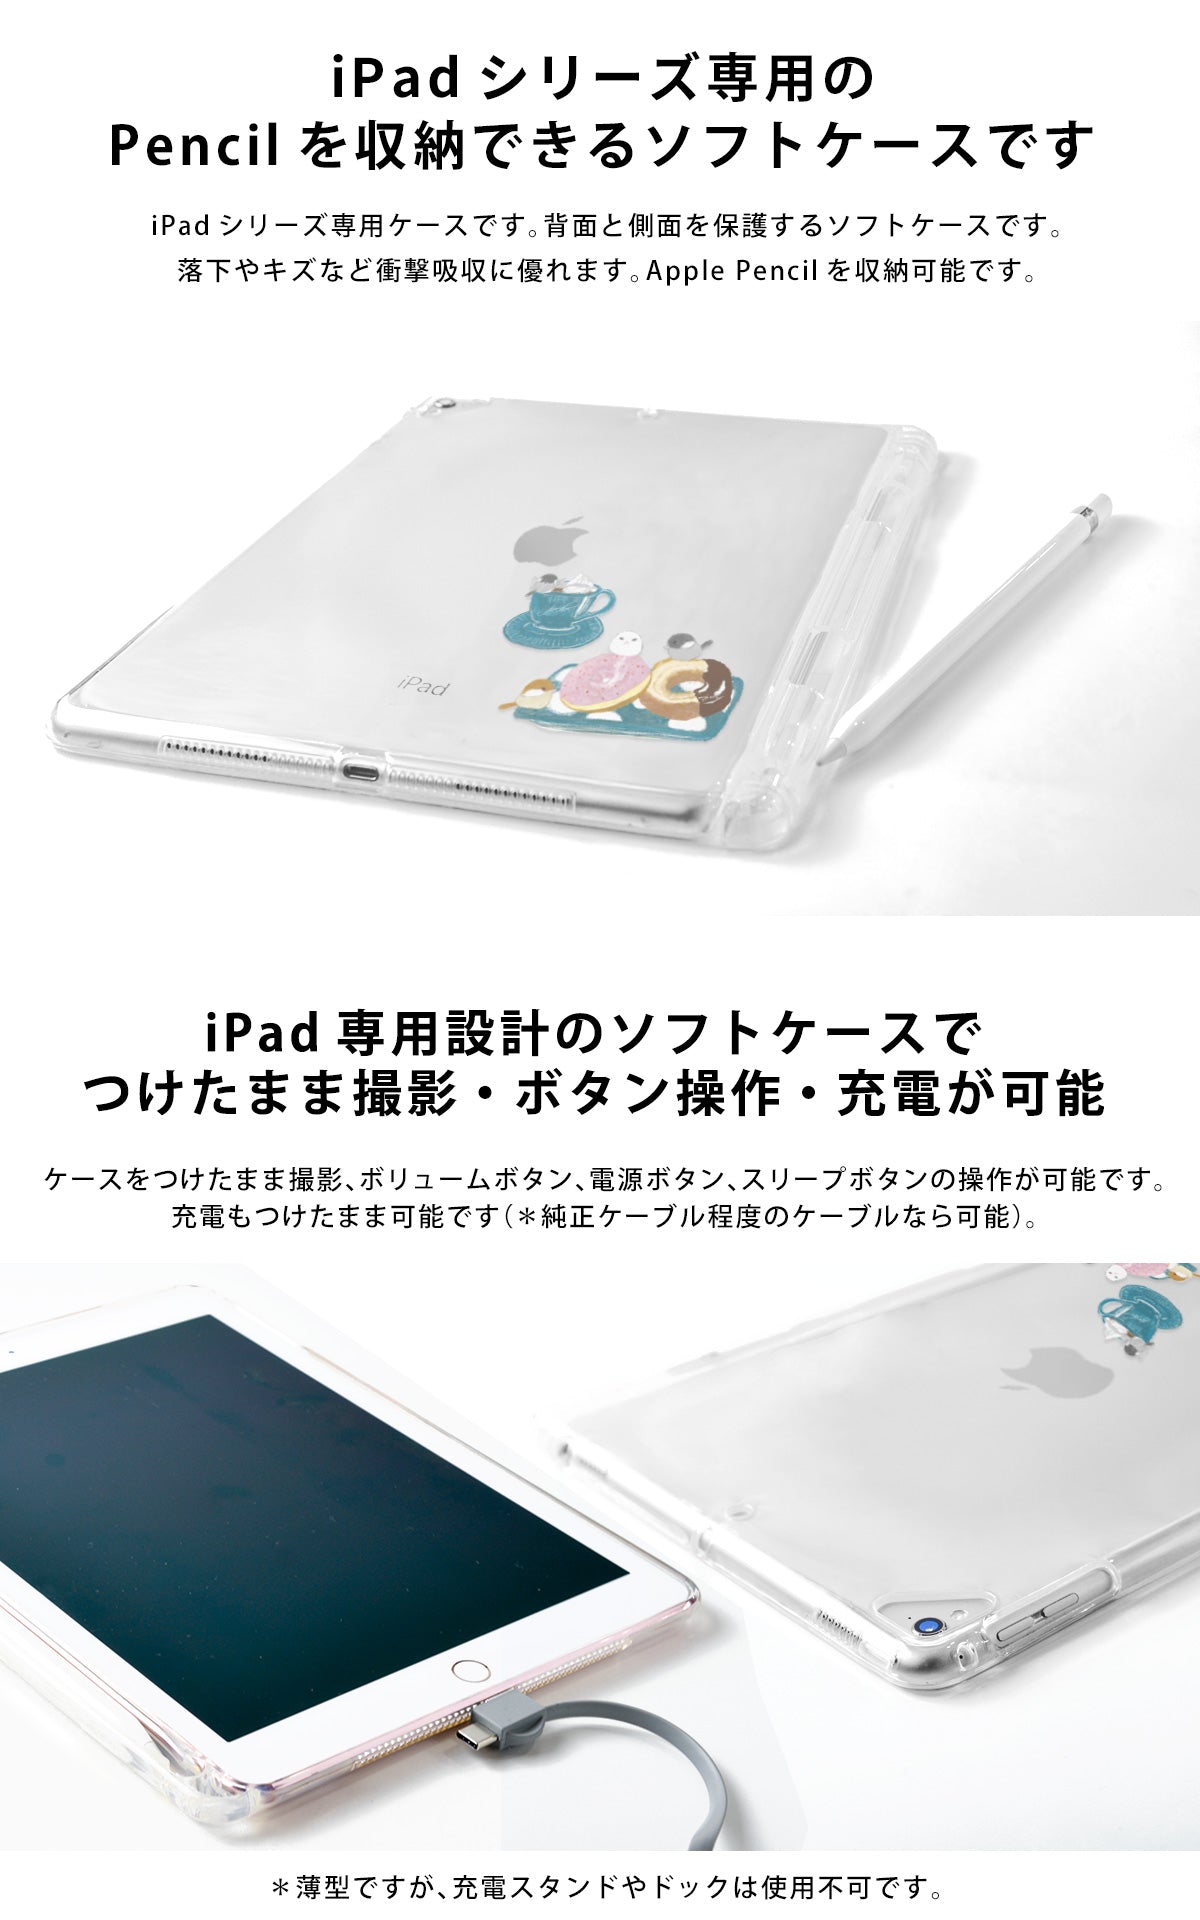 iPadクリアケースはアップルペンシルを収納可能です